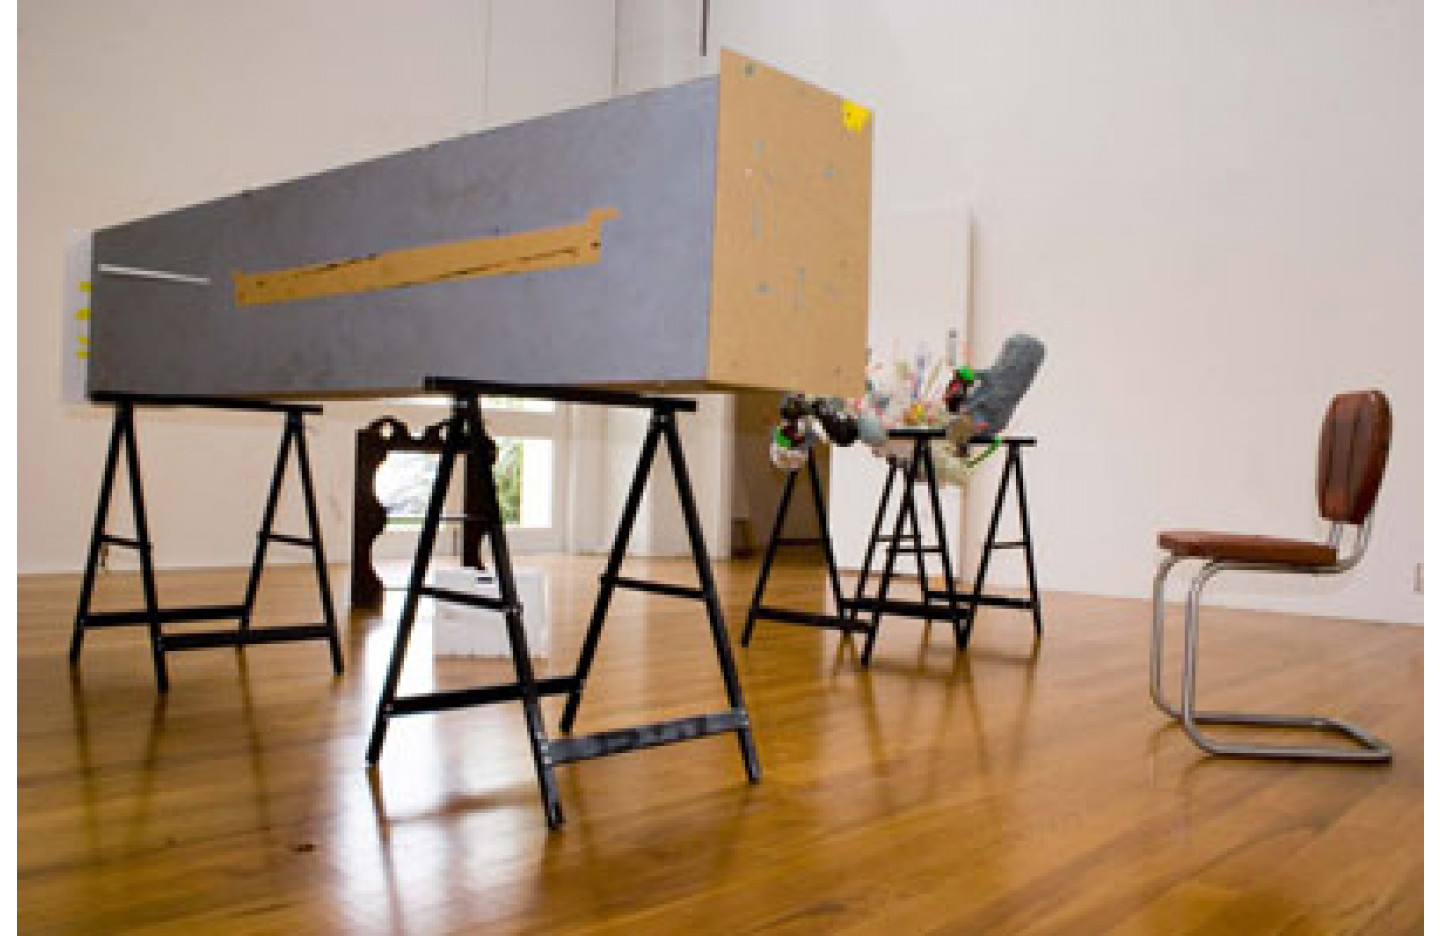 Zenith, Ramp Gallery (2009)